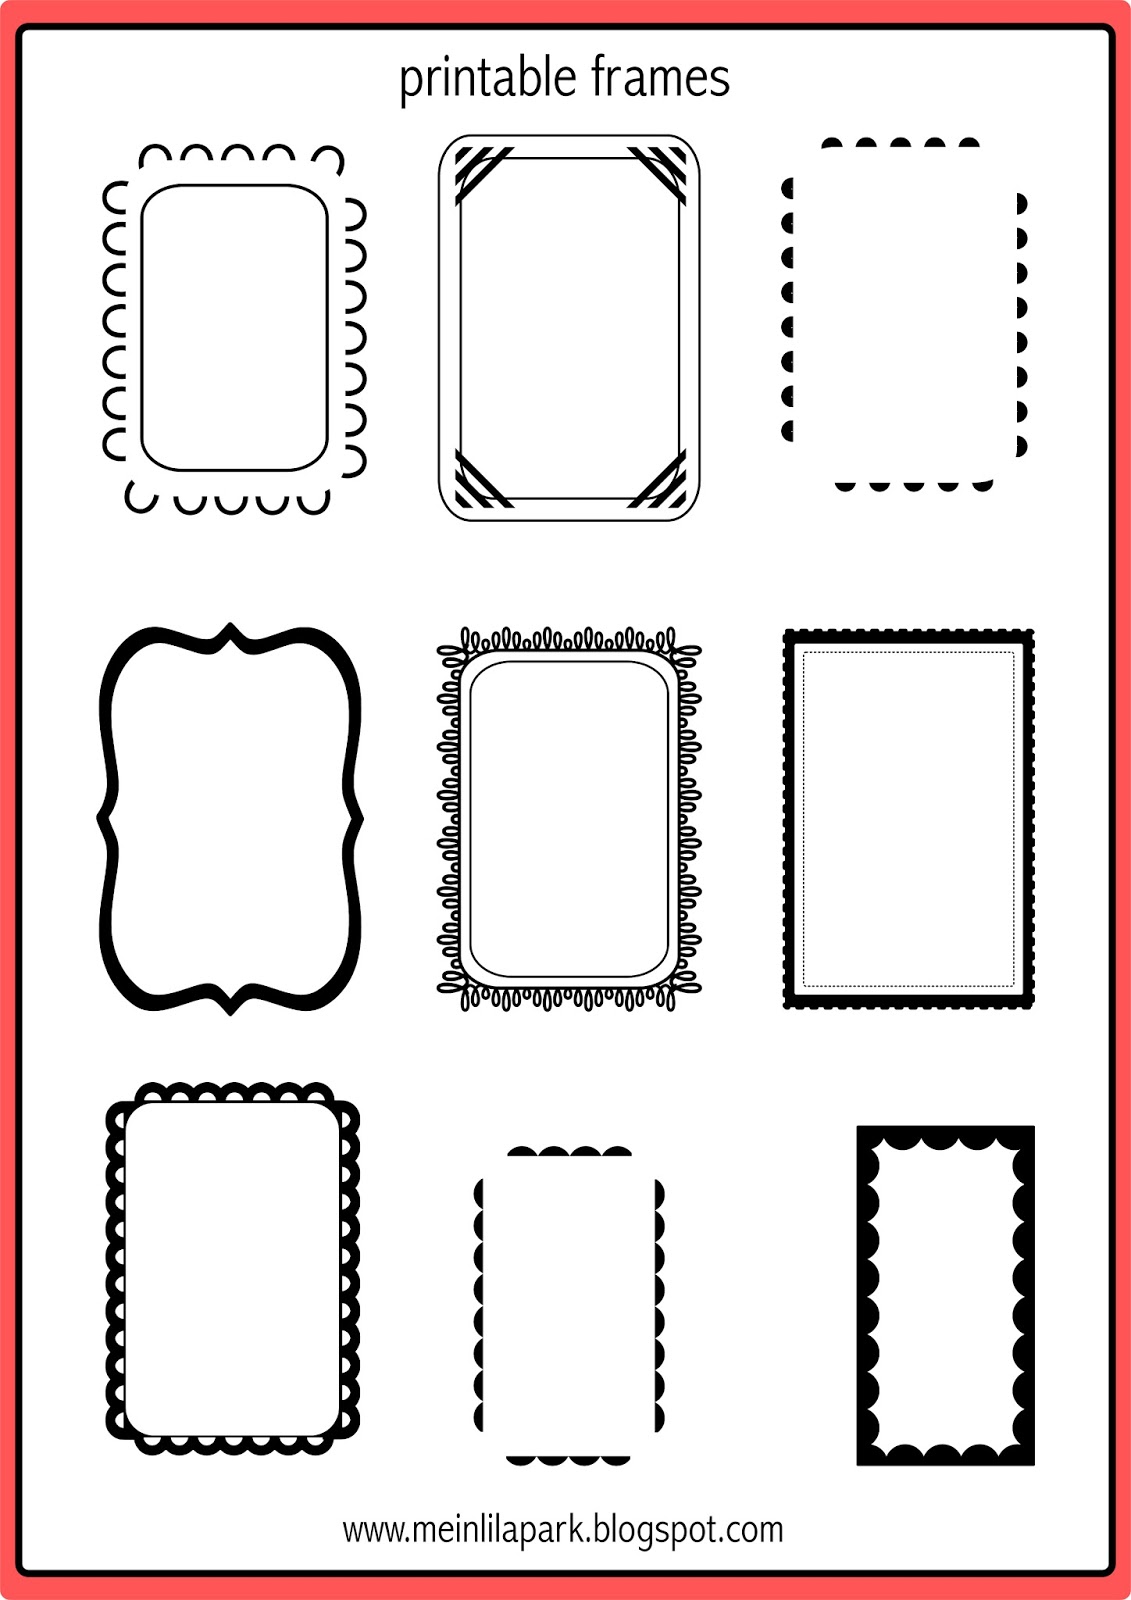 Free printable doodle frames - bullet journal template - freebie